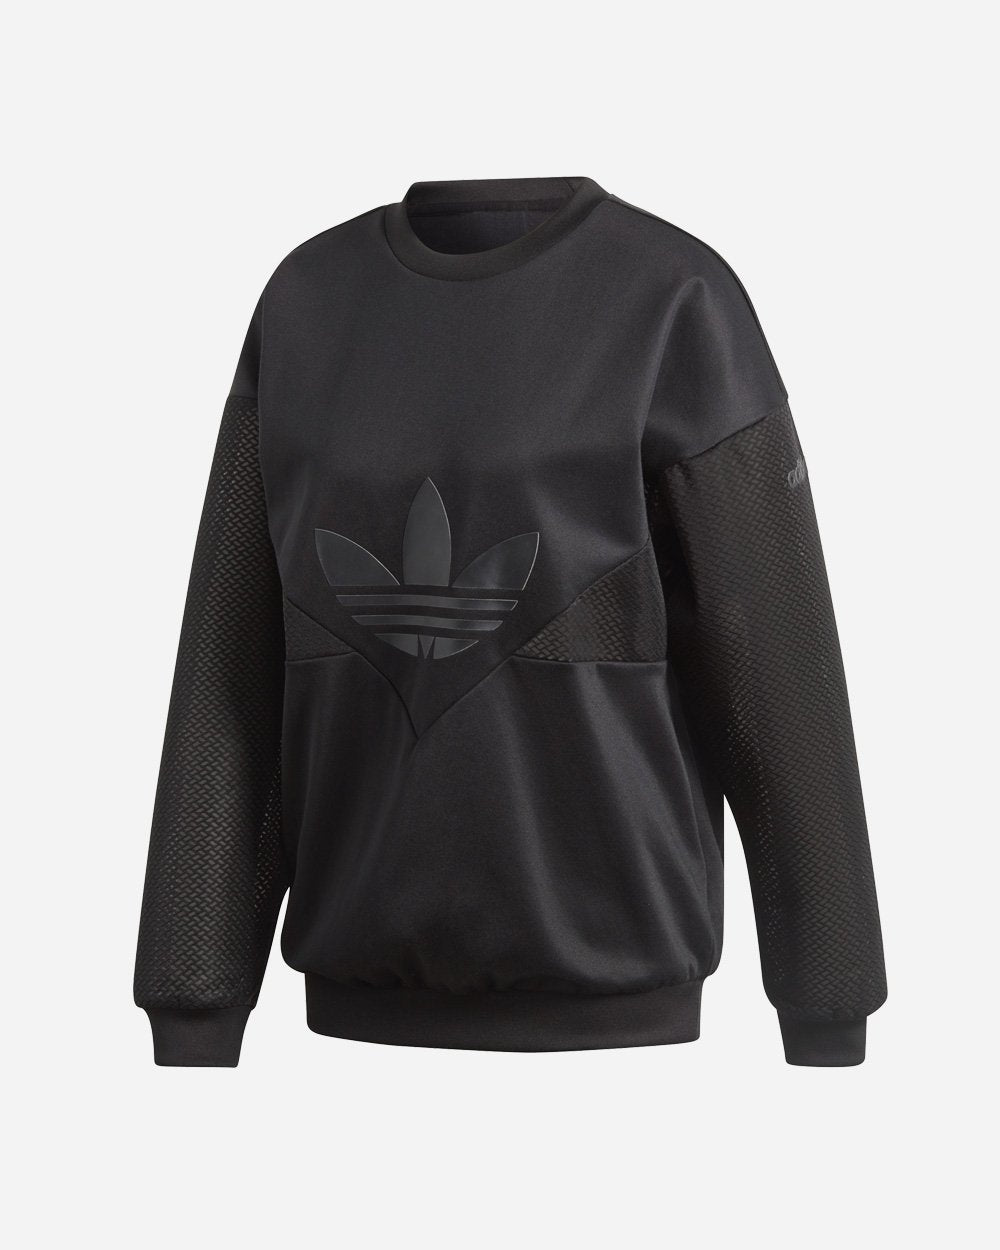 Adidas CLRDO Sweatshirt Black CW4961 